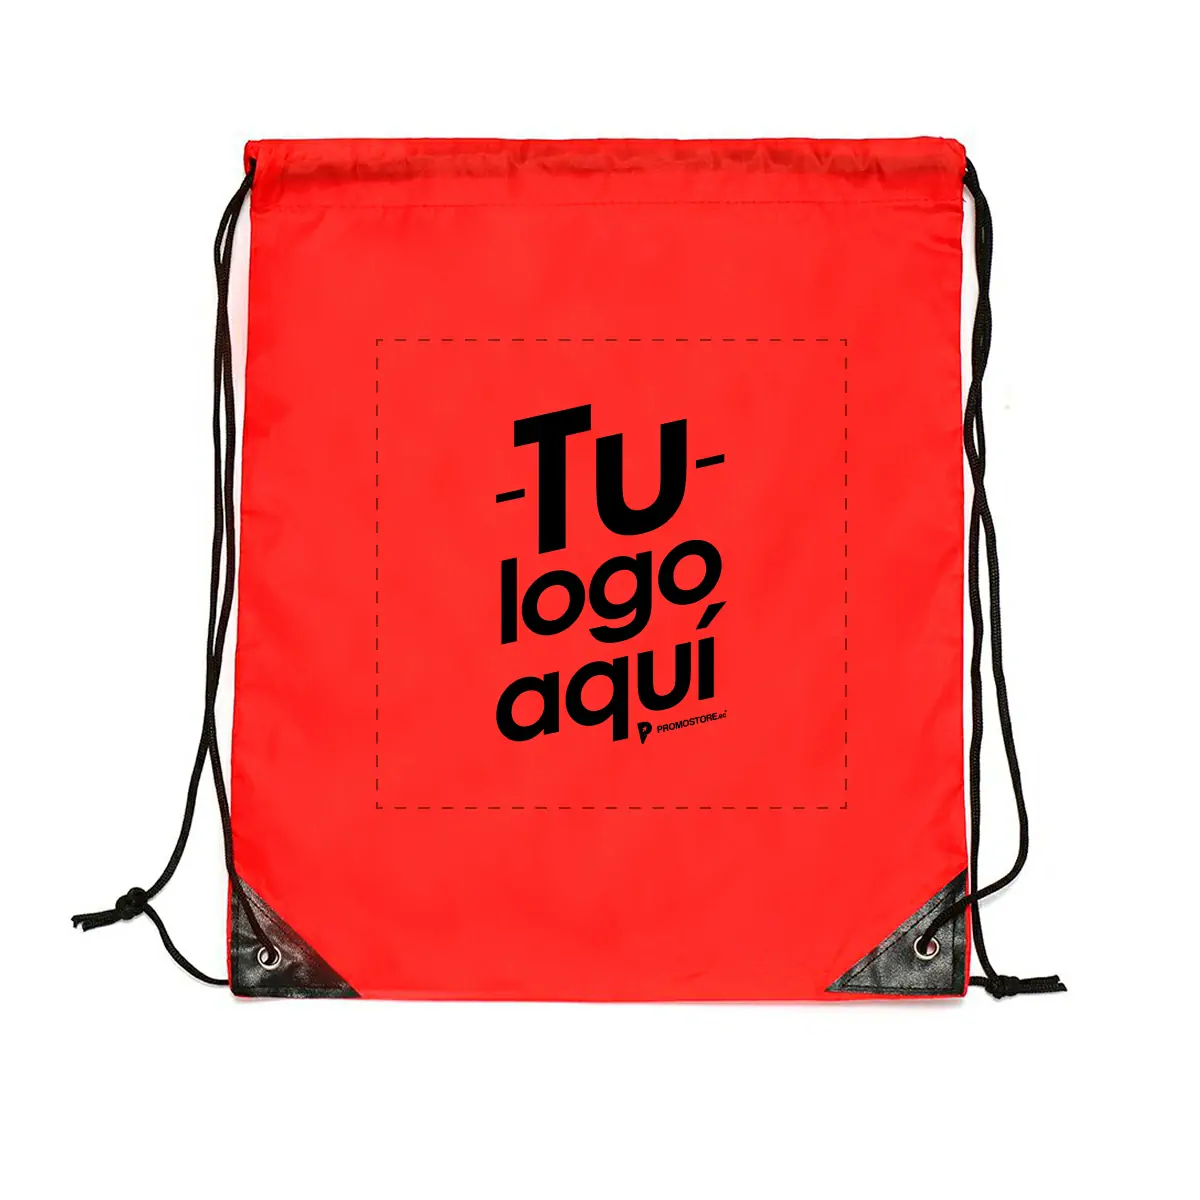 TXBL0030-Sportbag-Impermeable-Apolo-rojo-20×20